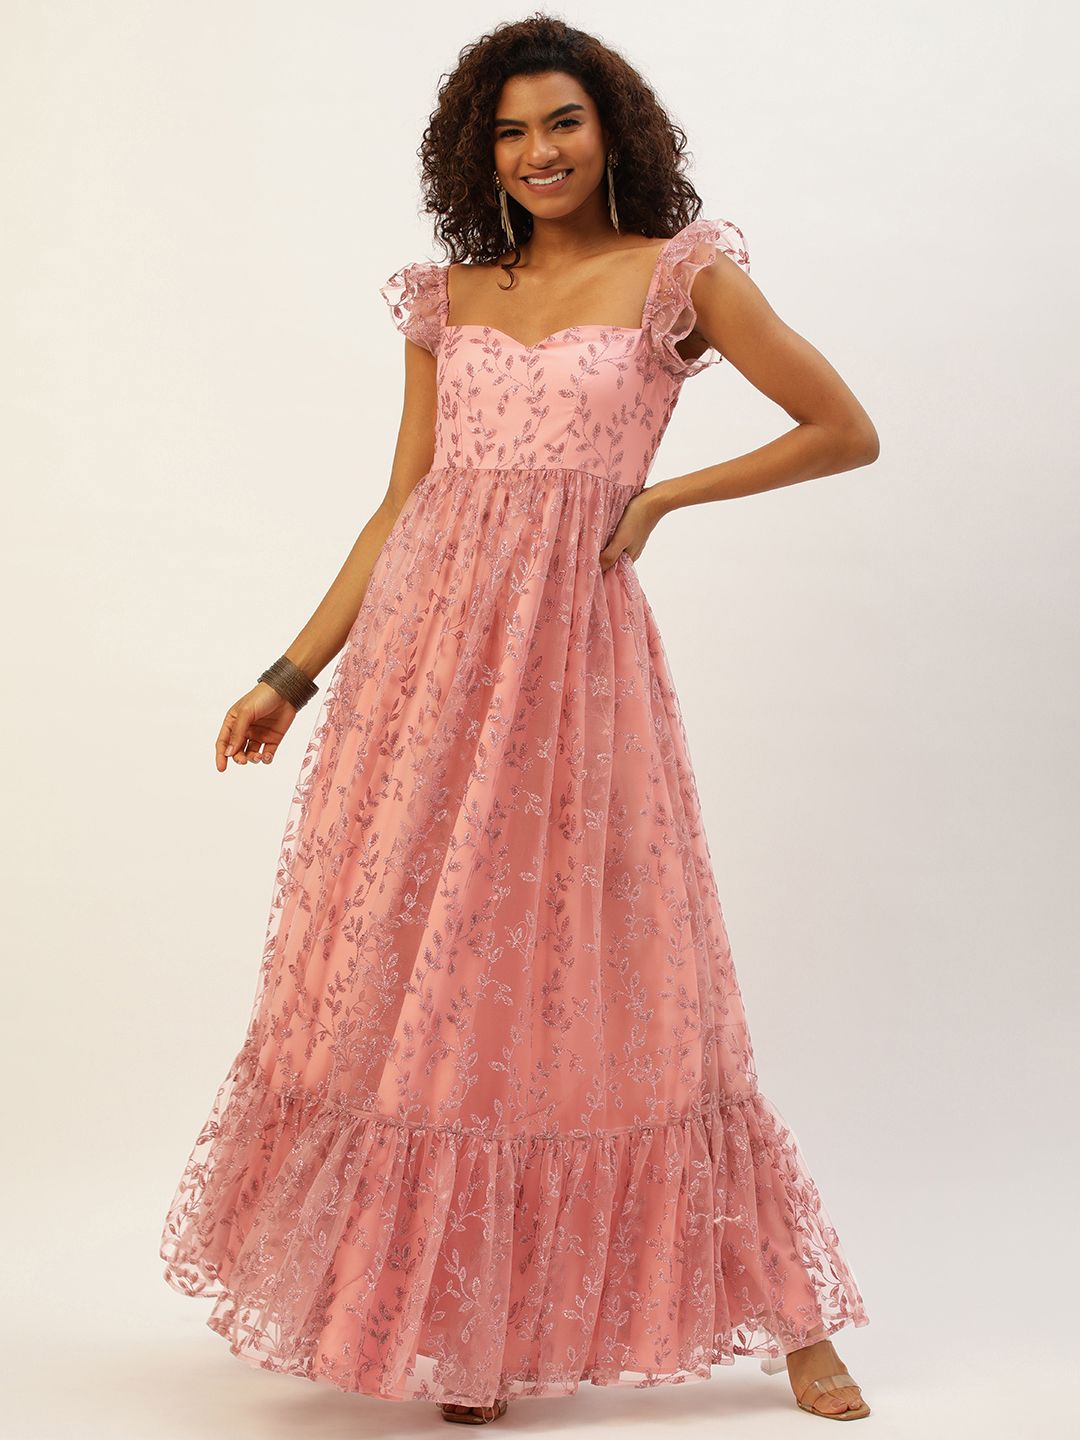 Ethnovog Pink Ethnic Motifs Embroidered Net Maxi Dress Price in India